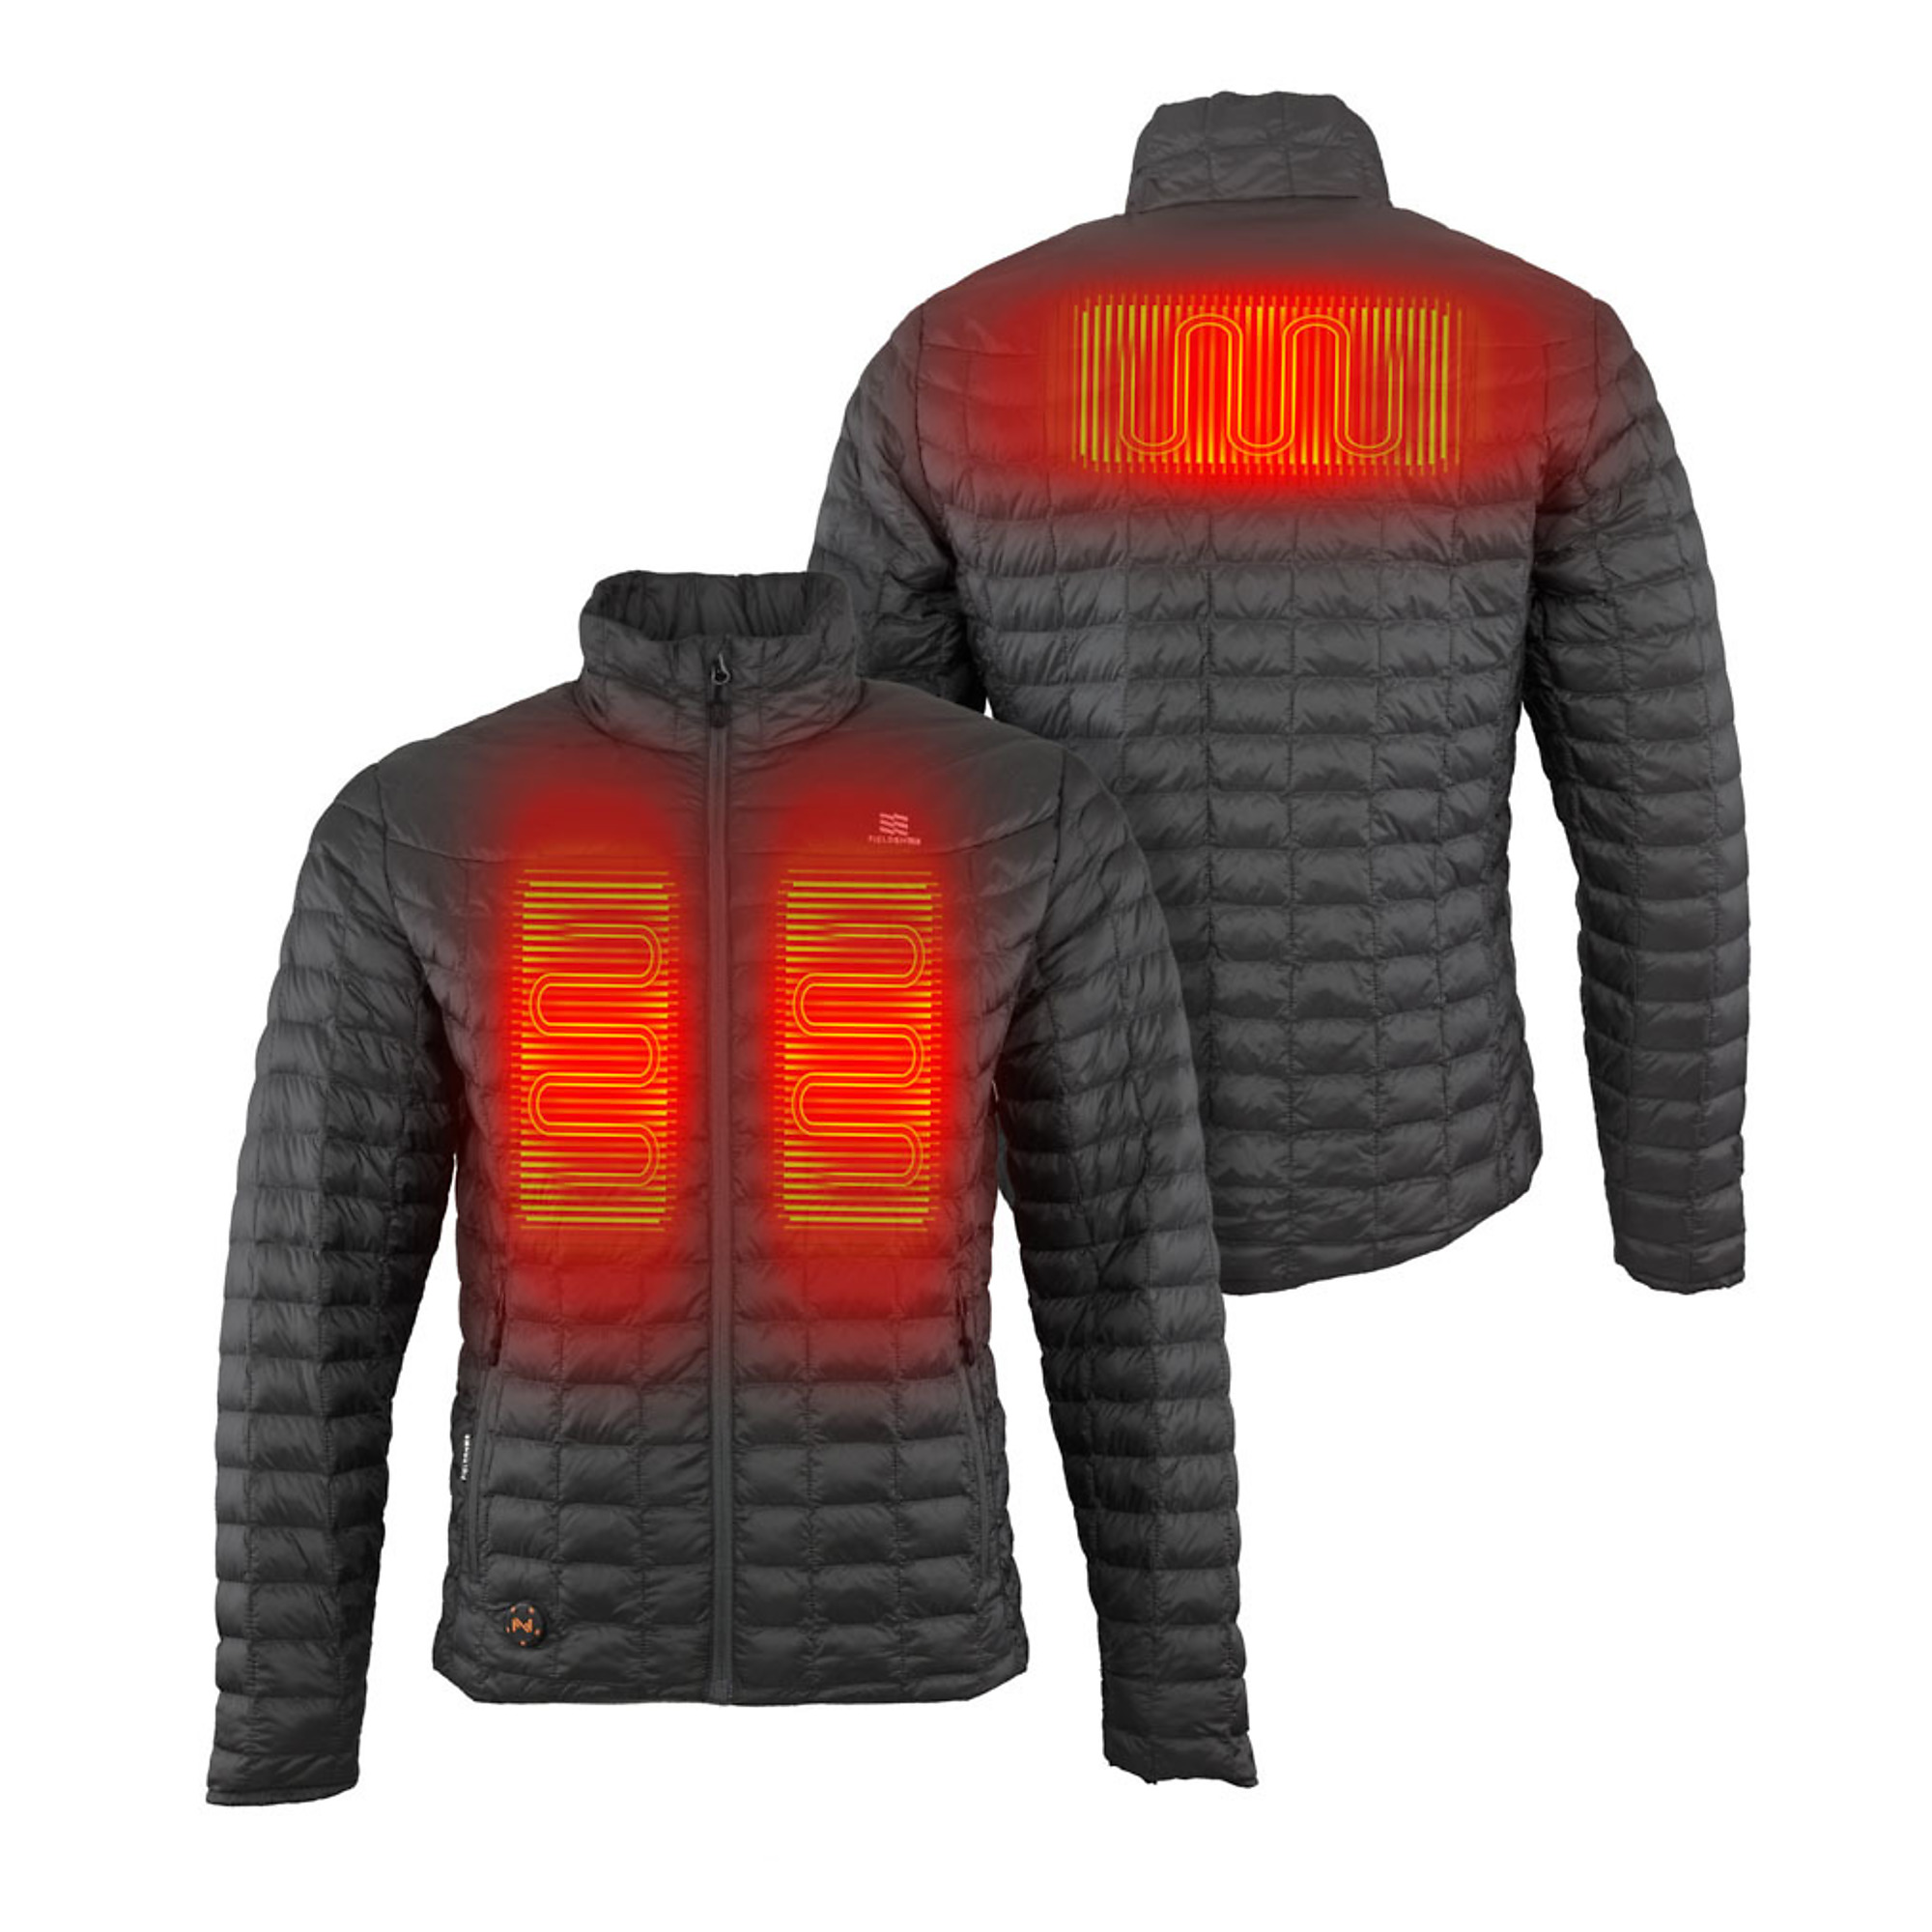 Fieldsheer, Men's Backcountry Heated Jacket with 7.4v Battery, Size 4XL, Color Black, Model MWMJ04010820